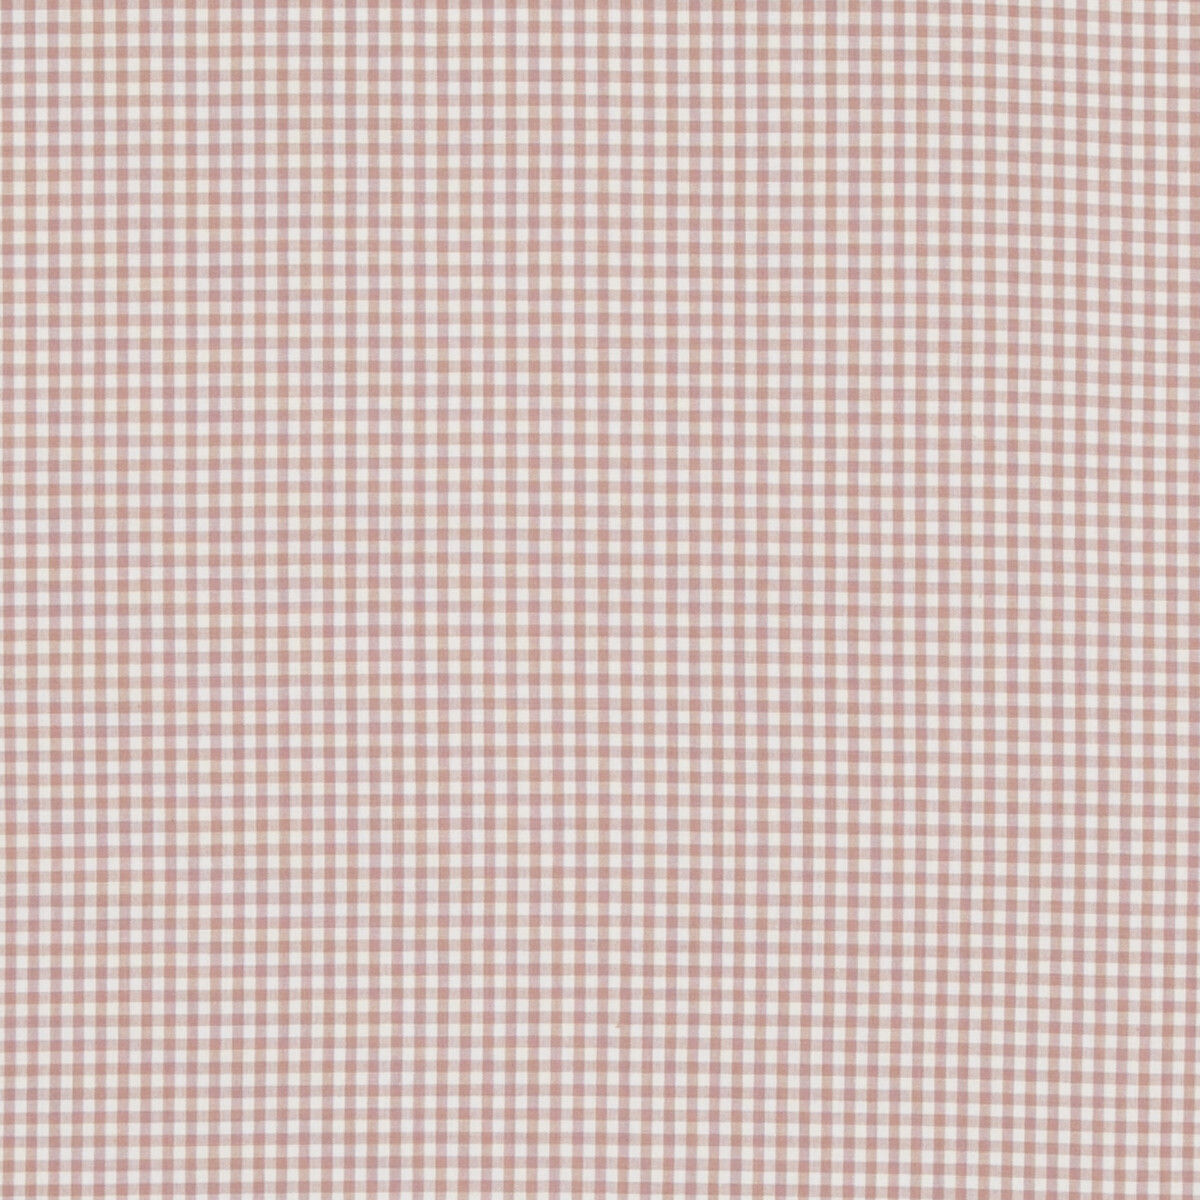 Baker Lifestyle Pf50506.404.0 Sherborne Gingham Multipurpose Fabric in Pink